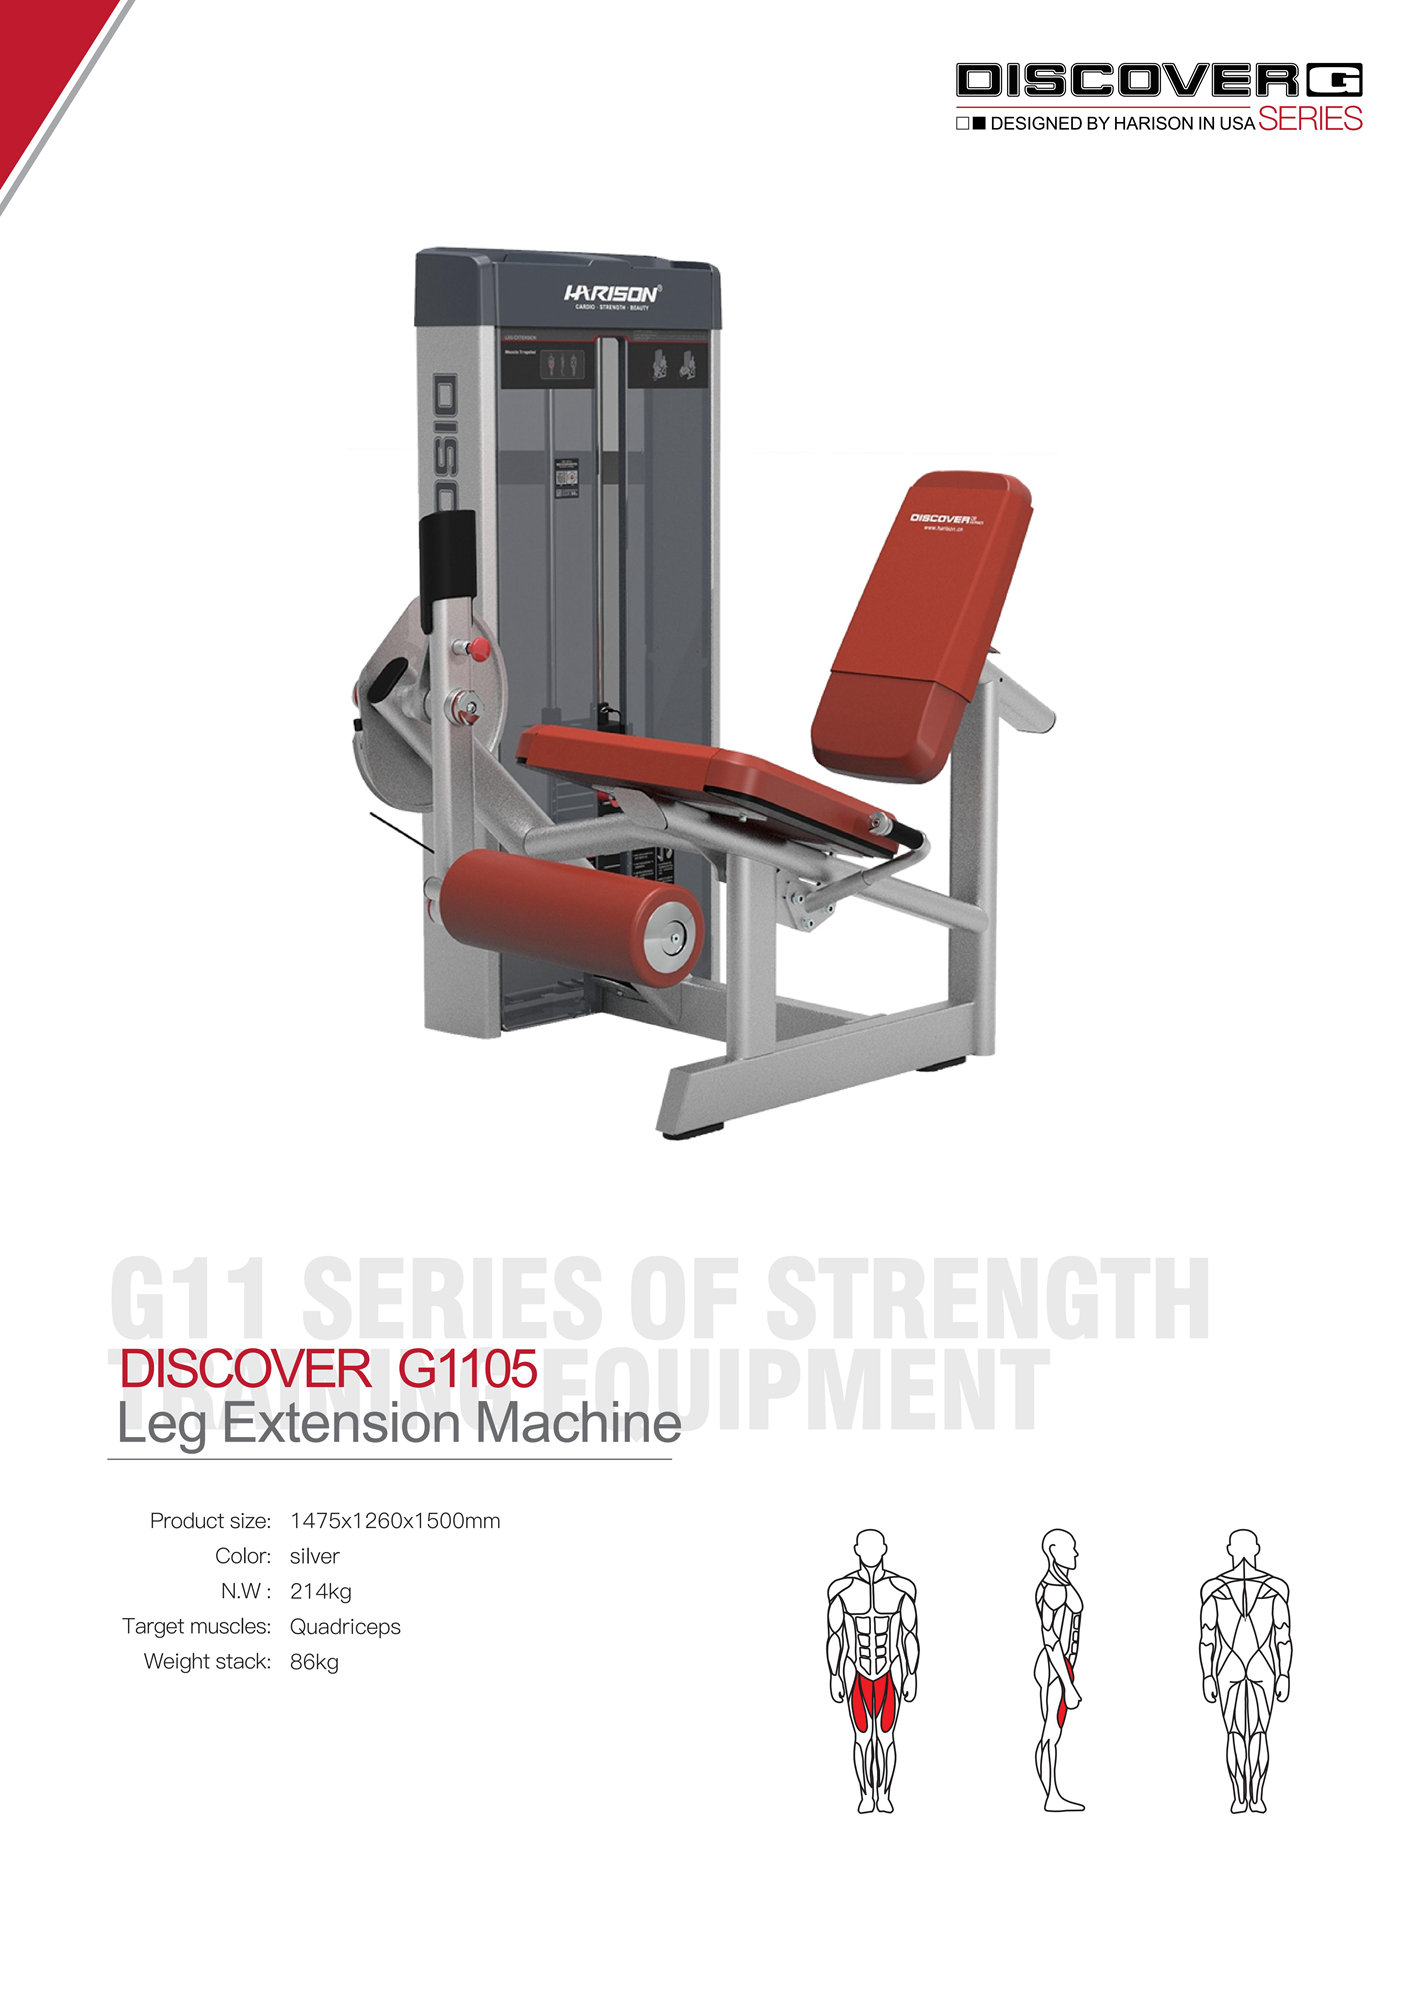 DISCOVER G1105 Leg Extension Machine